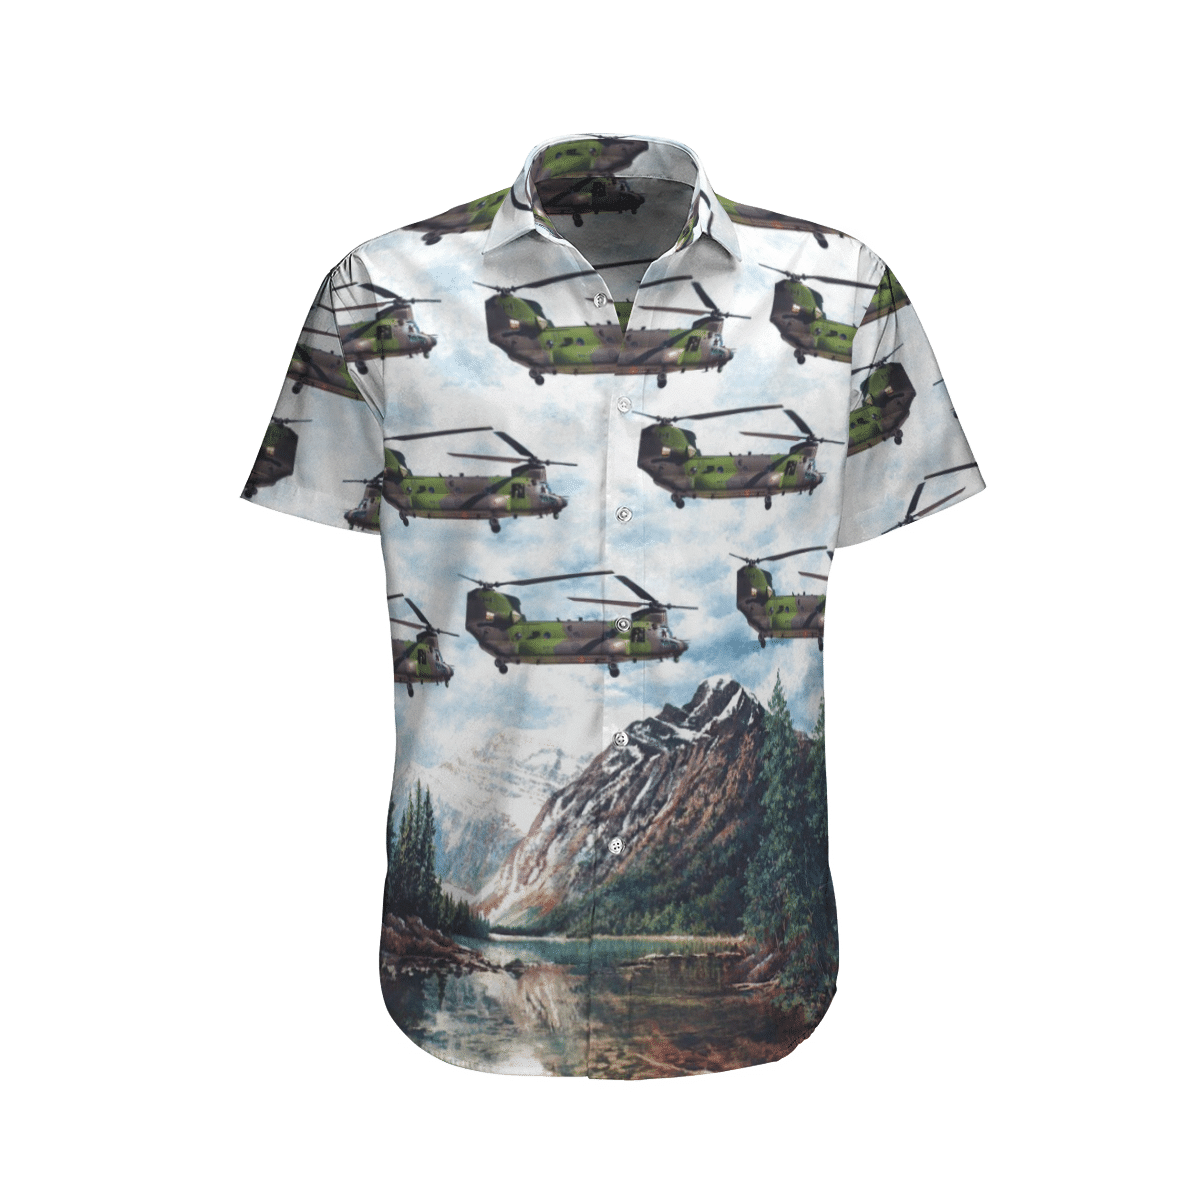 Get a new Hawaiian shirt to enjoy summer vacation 101